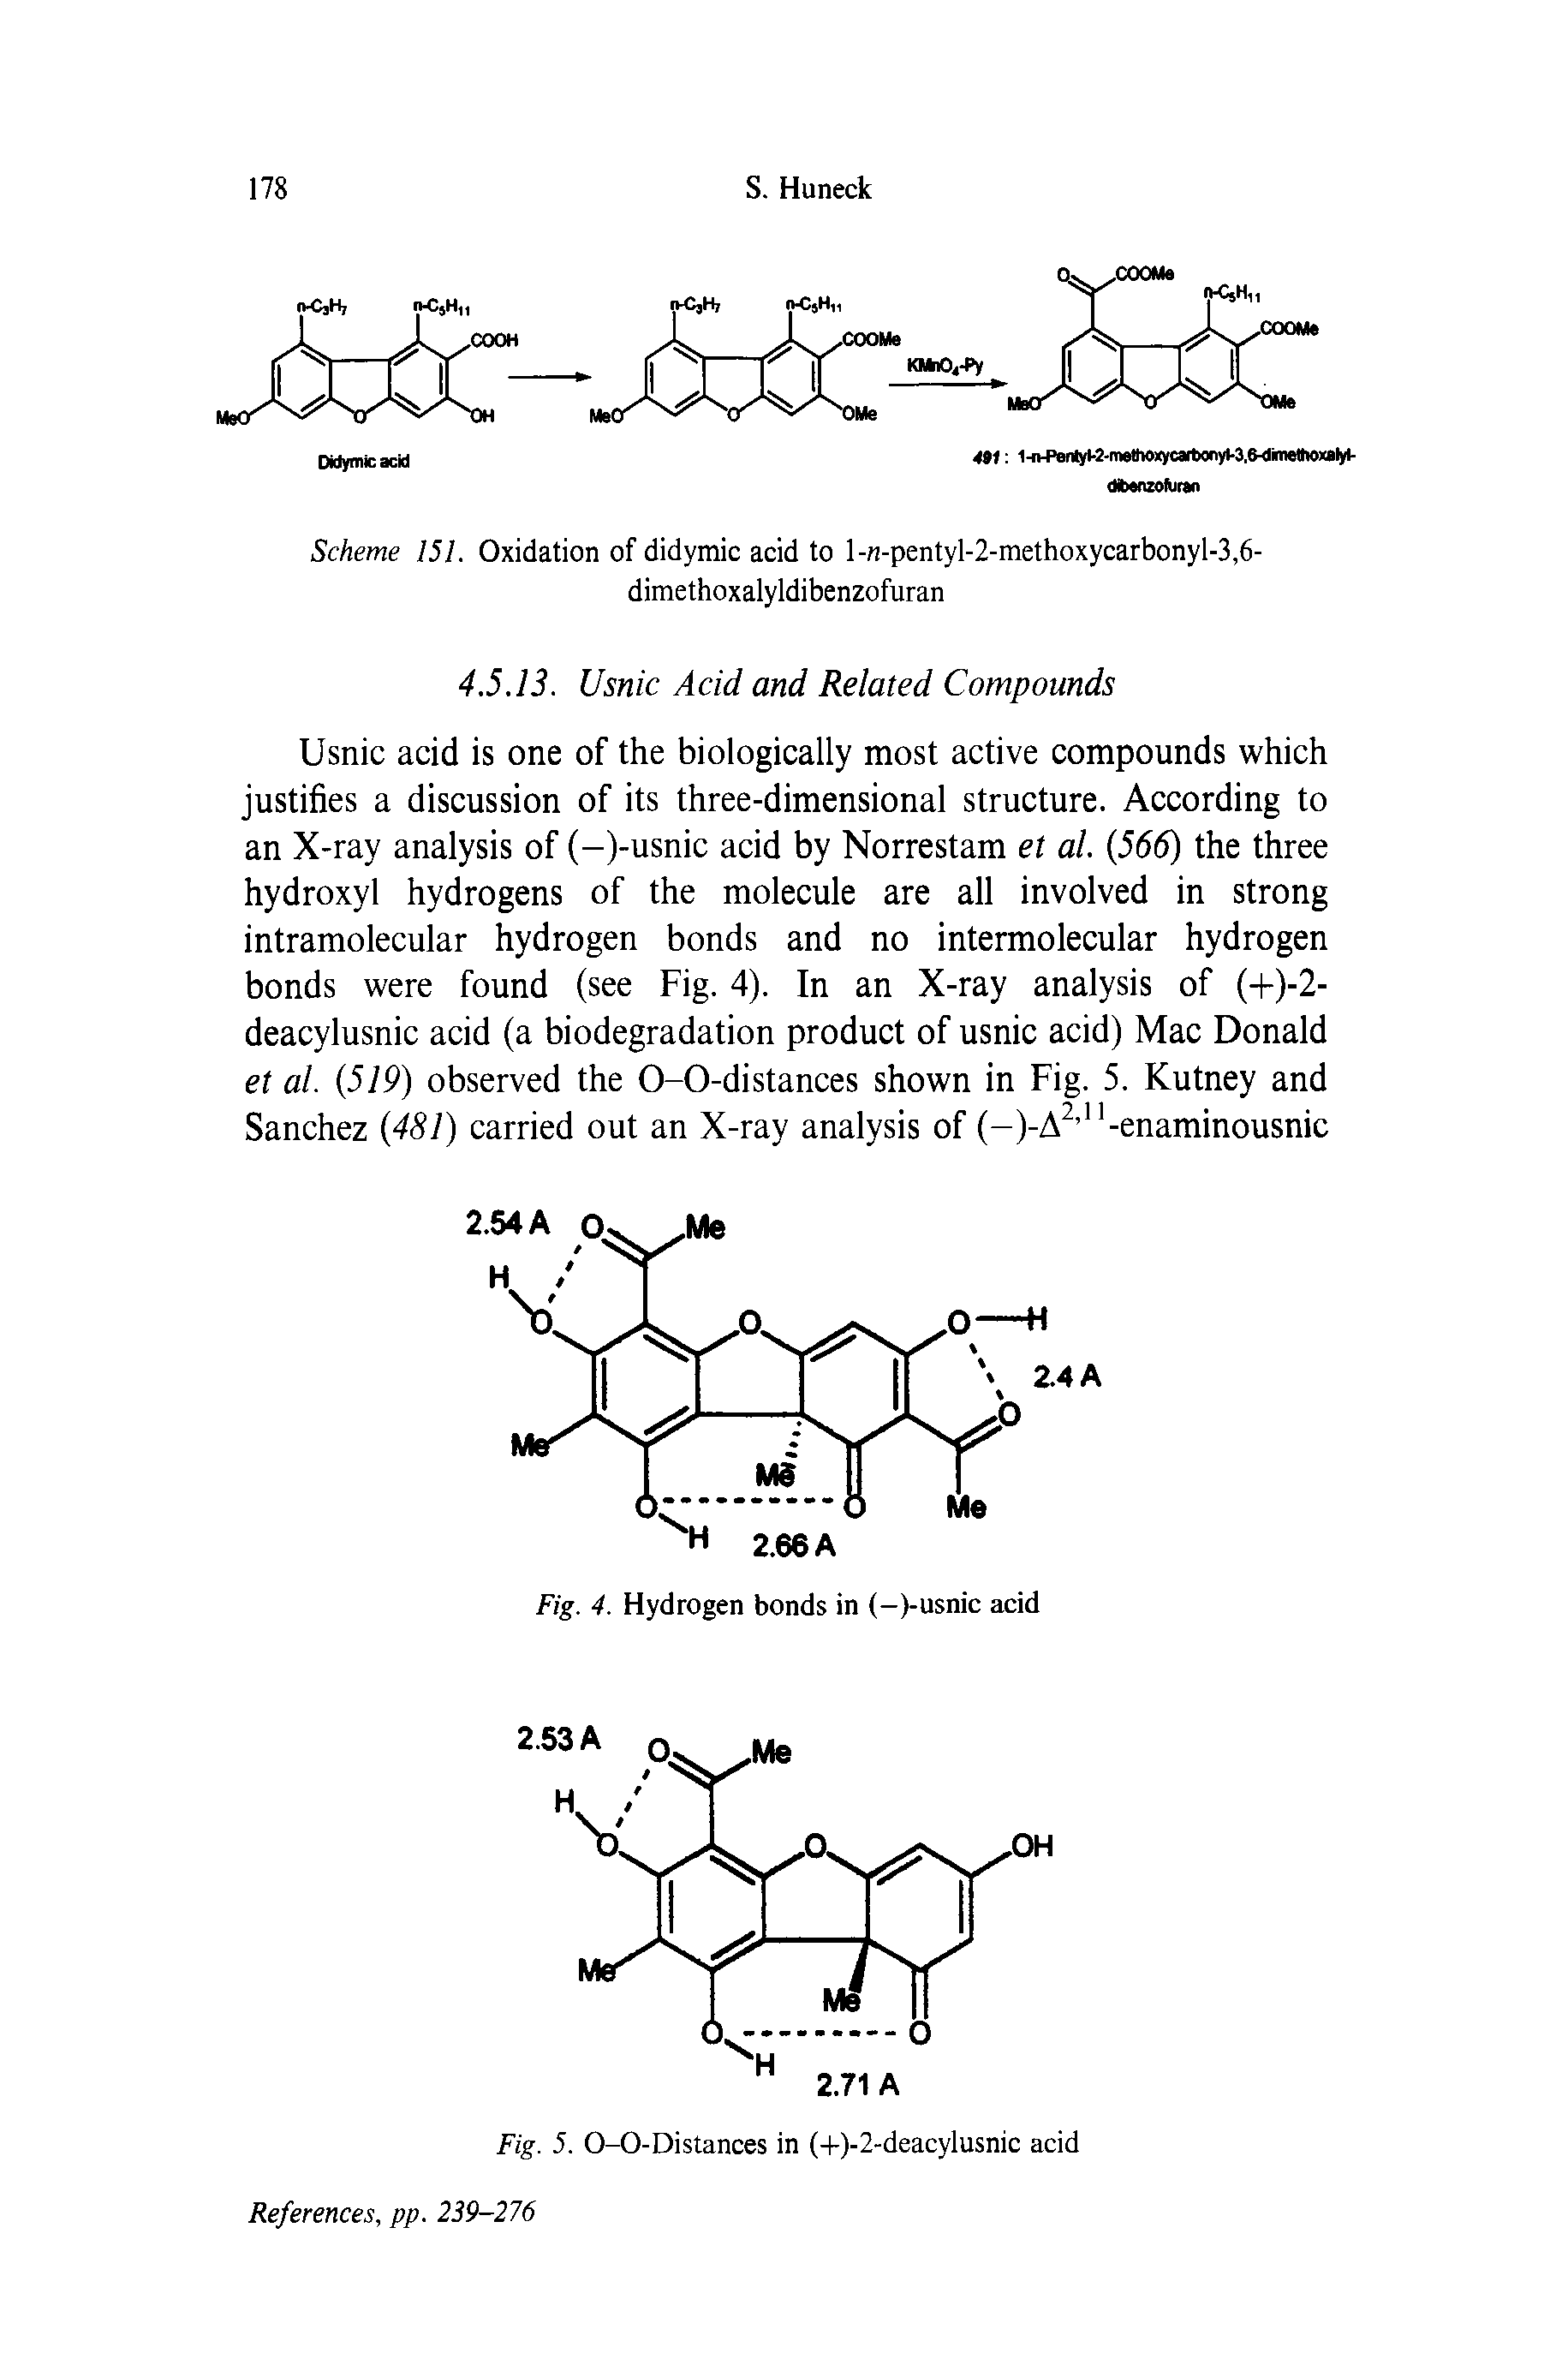 Scheme 151. Oxidation of didymic acid to l-n-pentyl-2-methoxycarbonyl-3,6-dimethoxalyldibenzofuran...